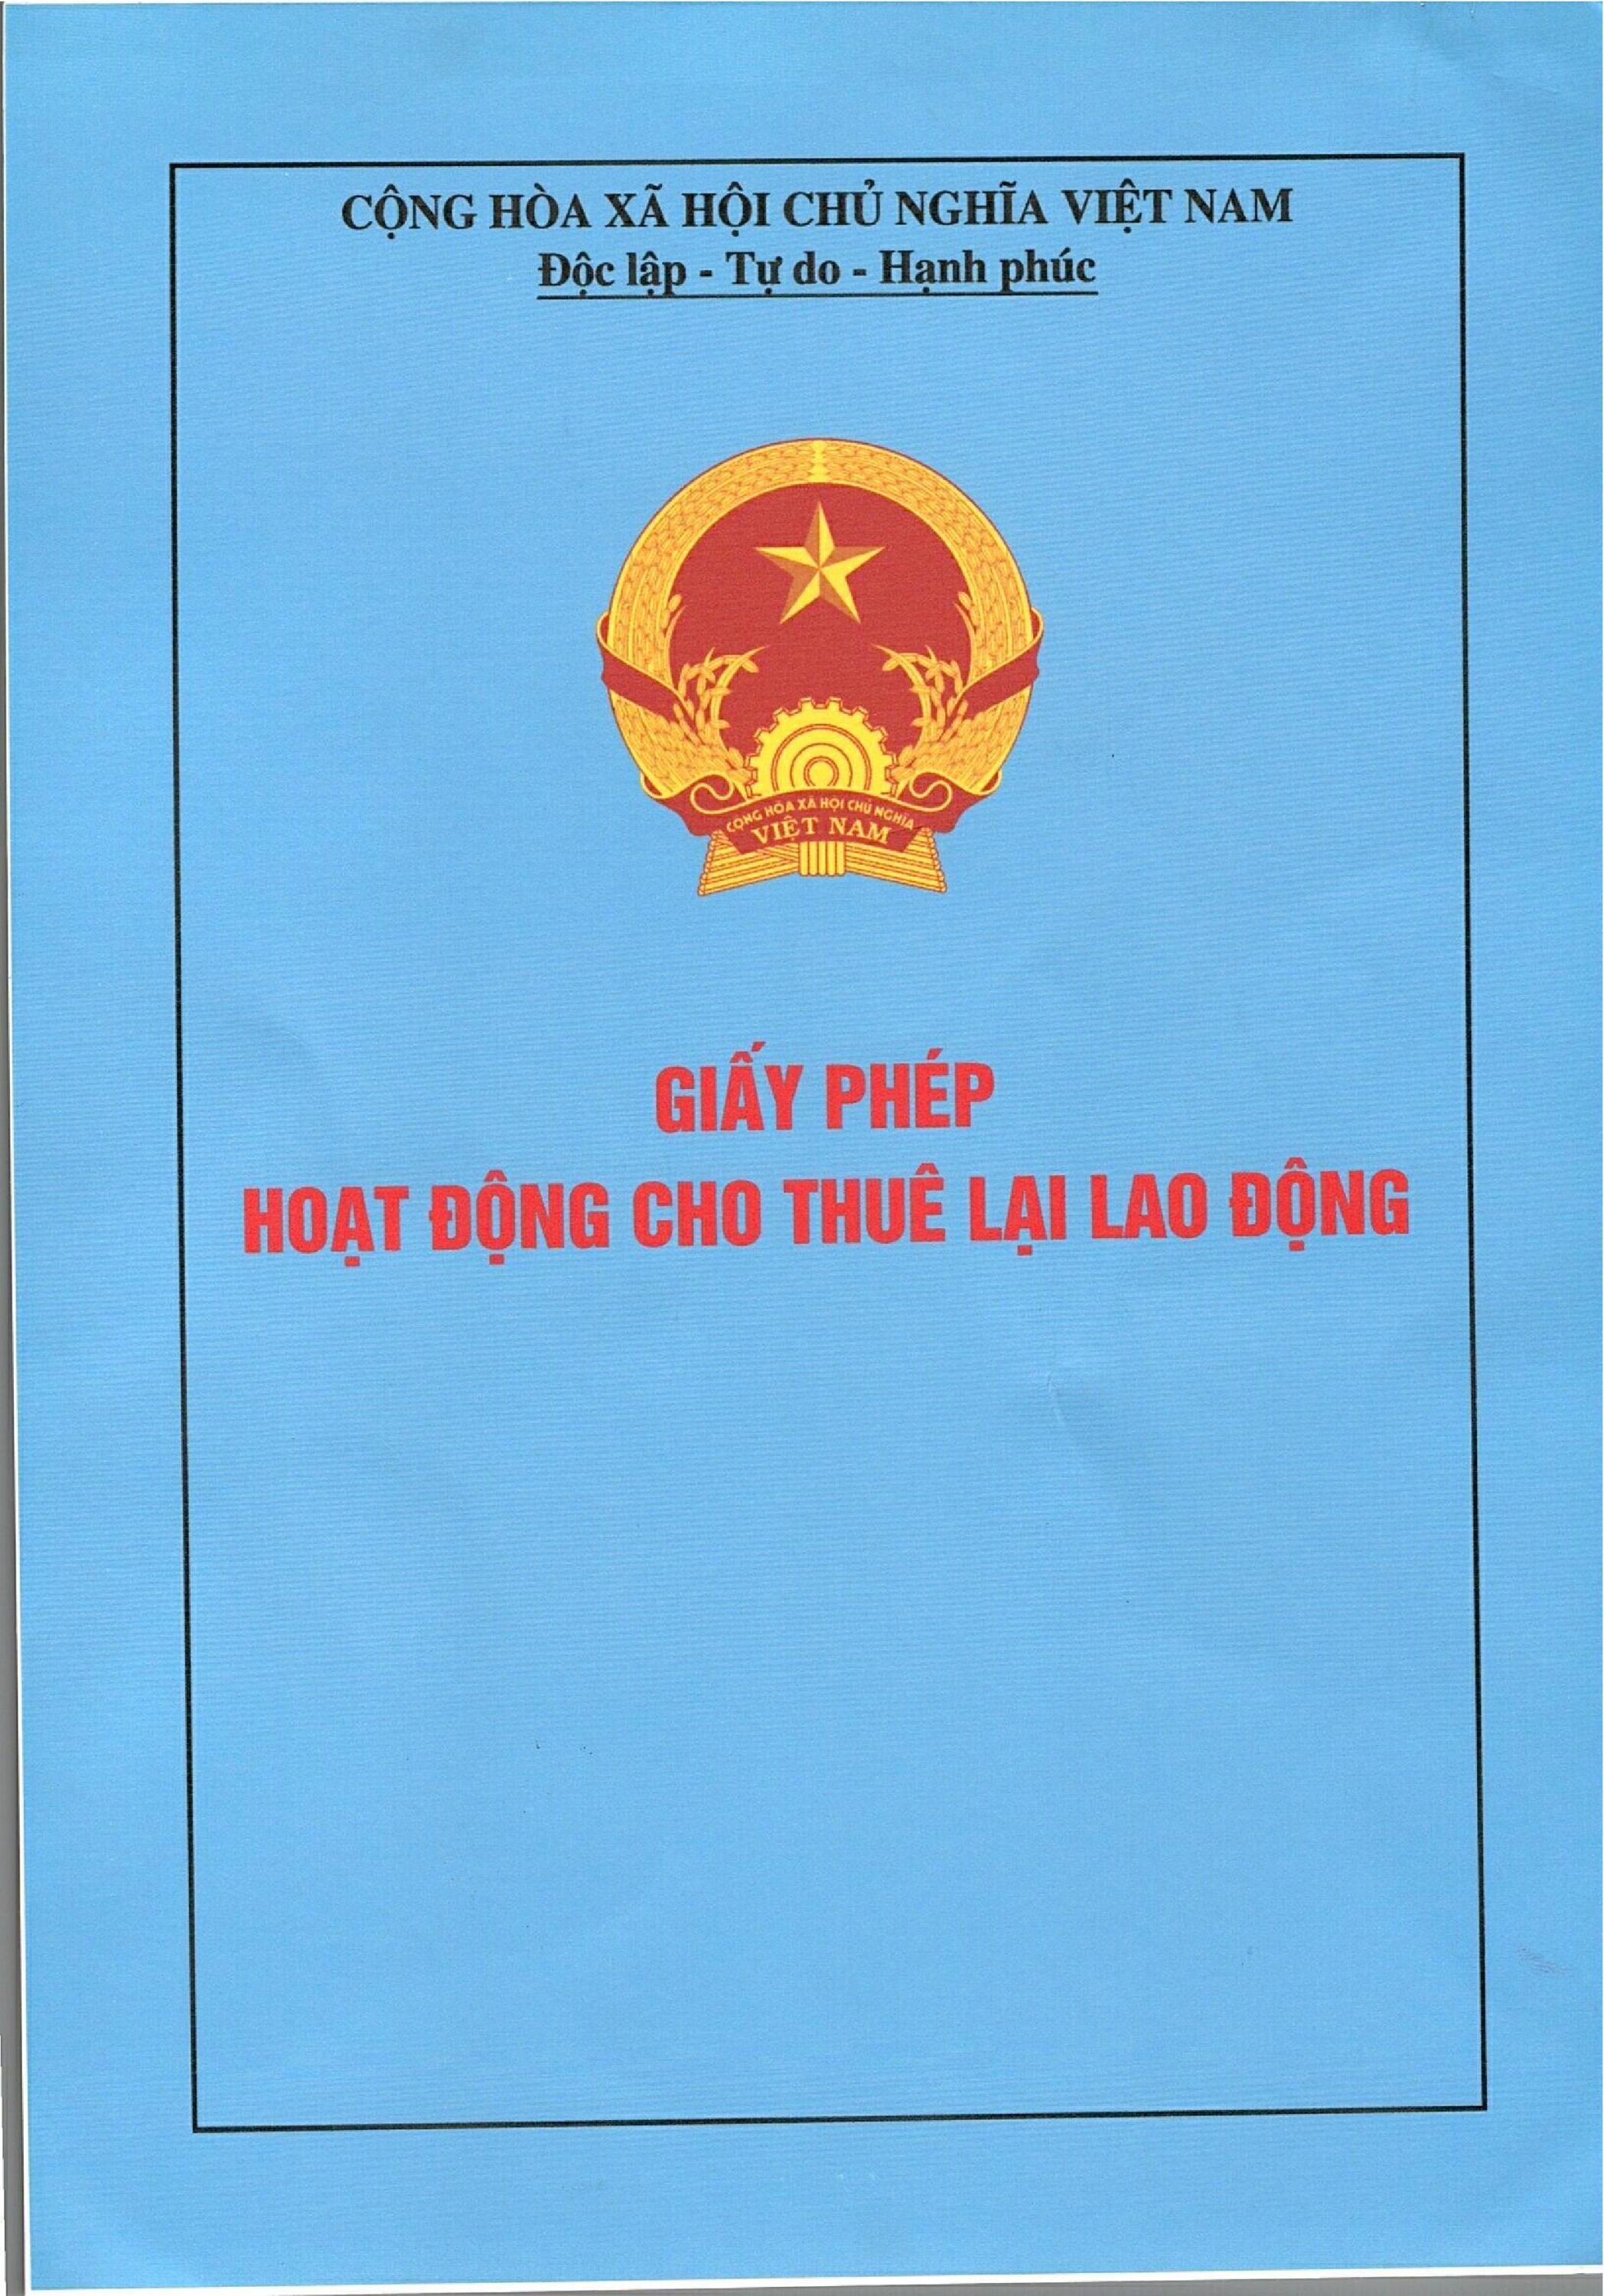 GPLD Cty Cung ung LD hung Phuc 1